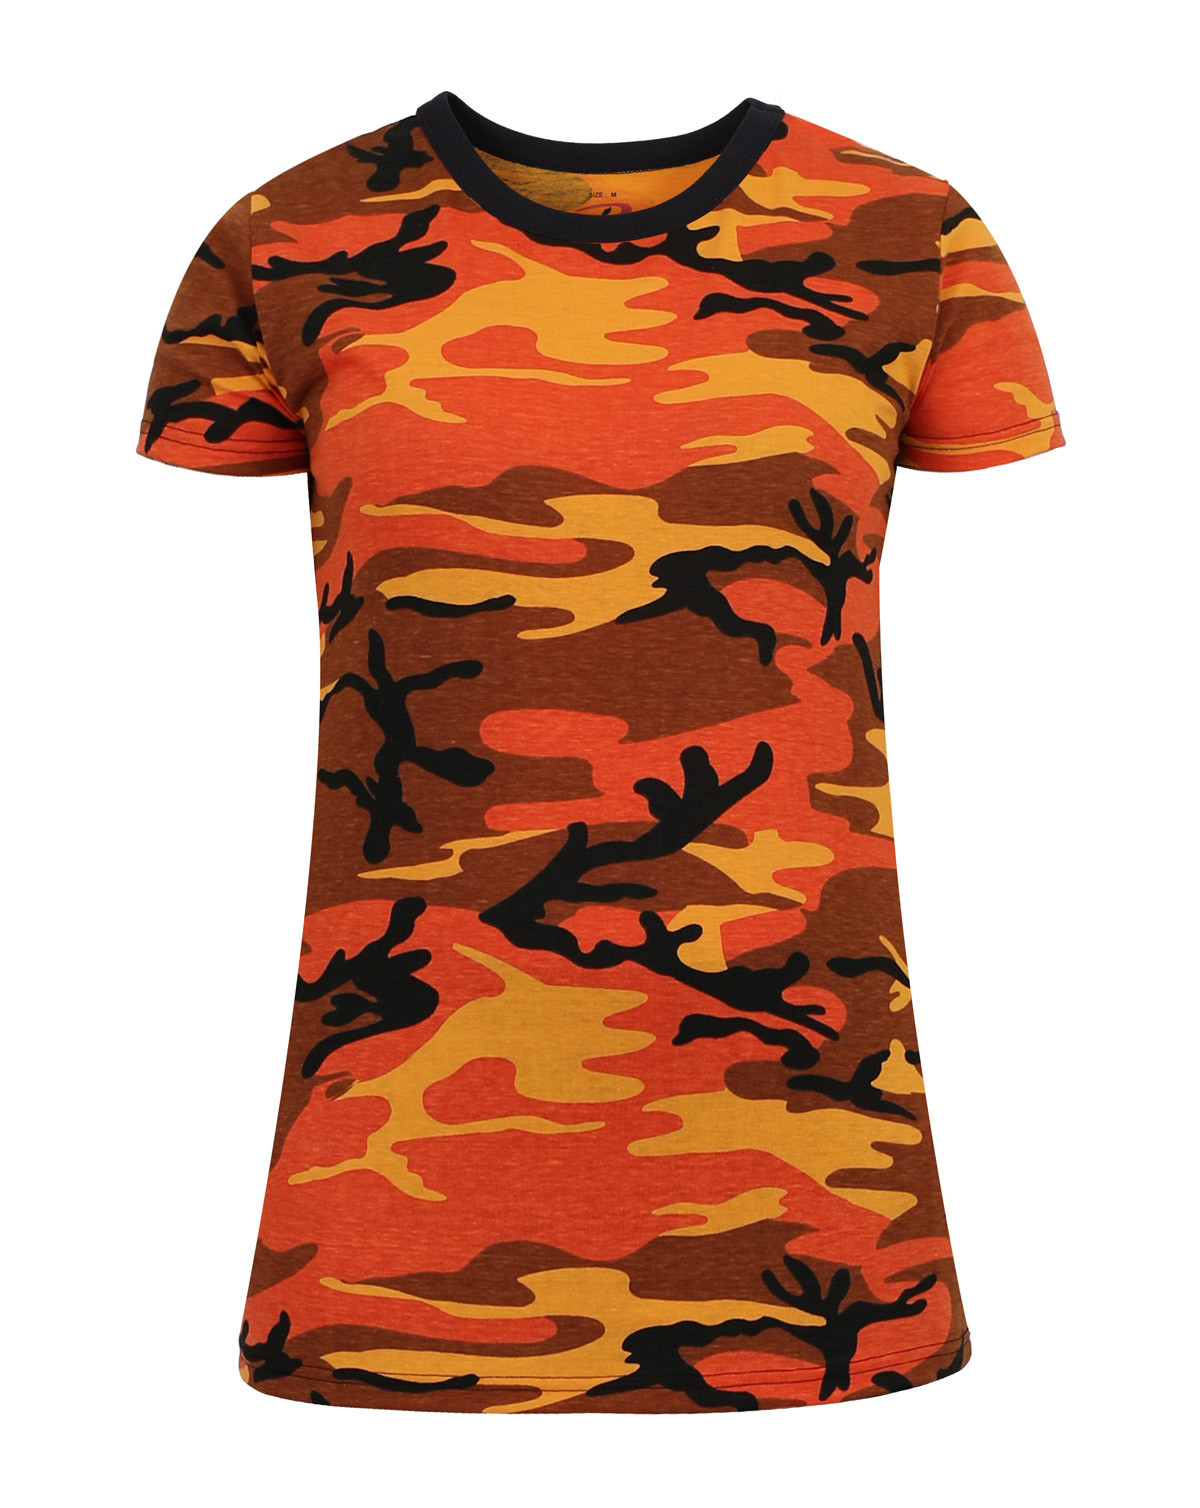 #3 - Rothco Camouflage T-Shirt (Orange Camo, L)